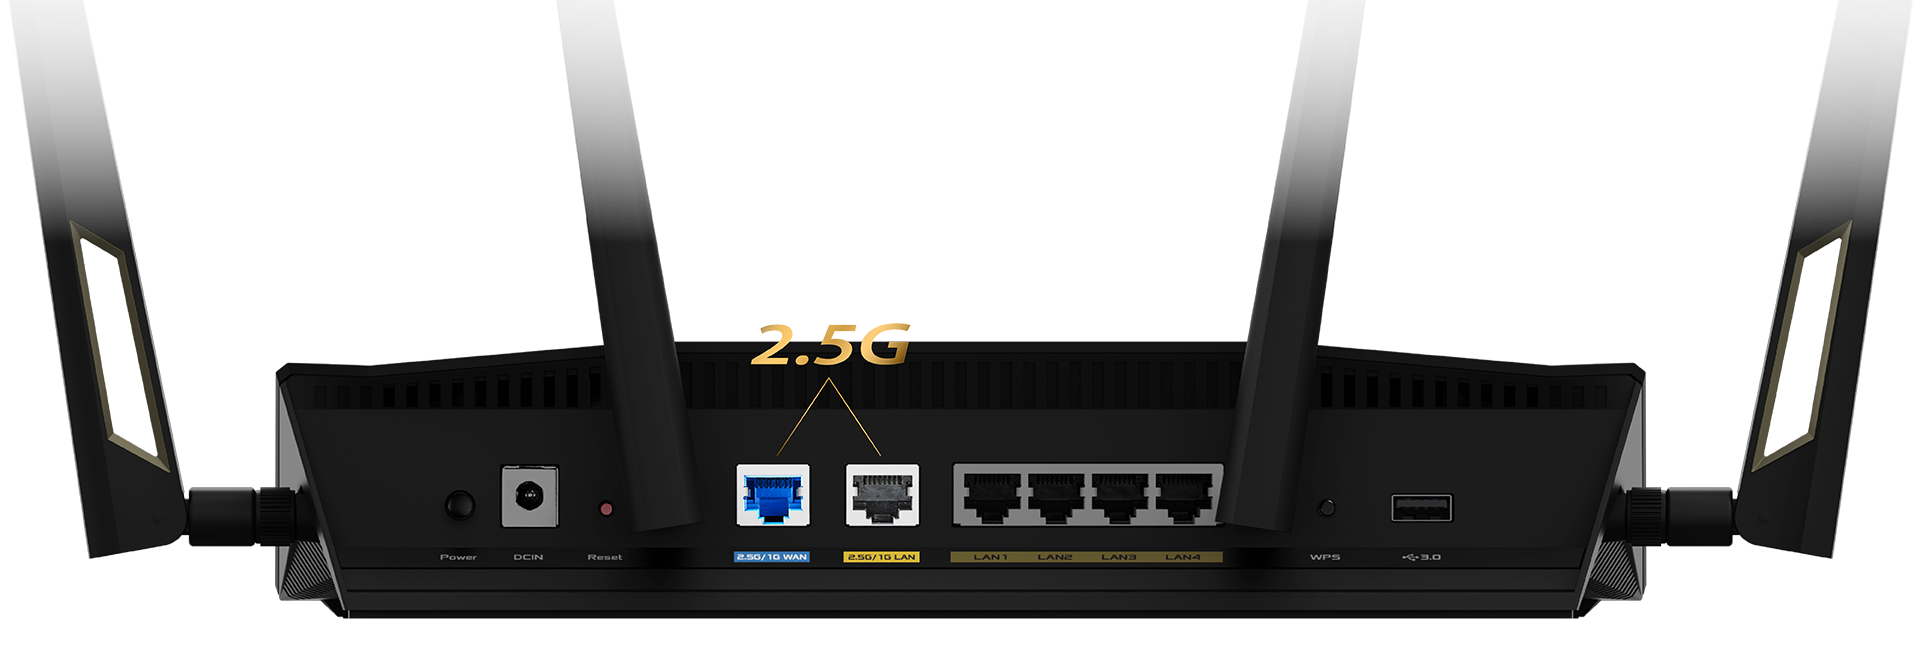 RT-AX88U Pro 具有双 2.5 Gbps 以太网络端口，支持链路聚合。